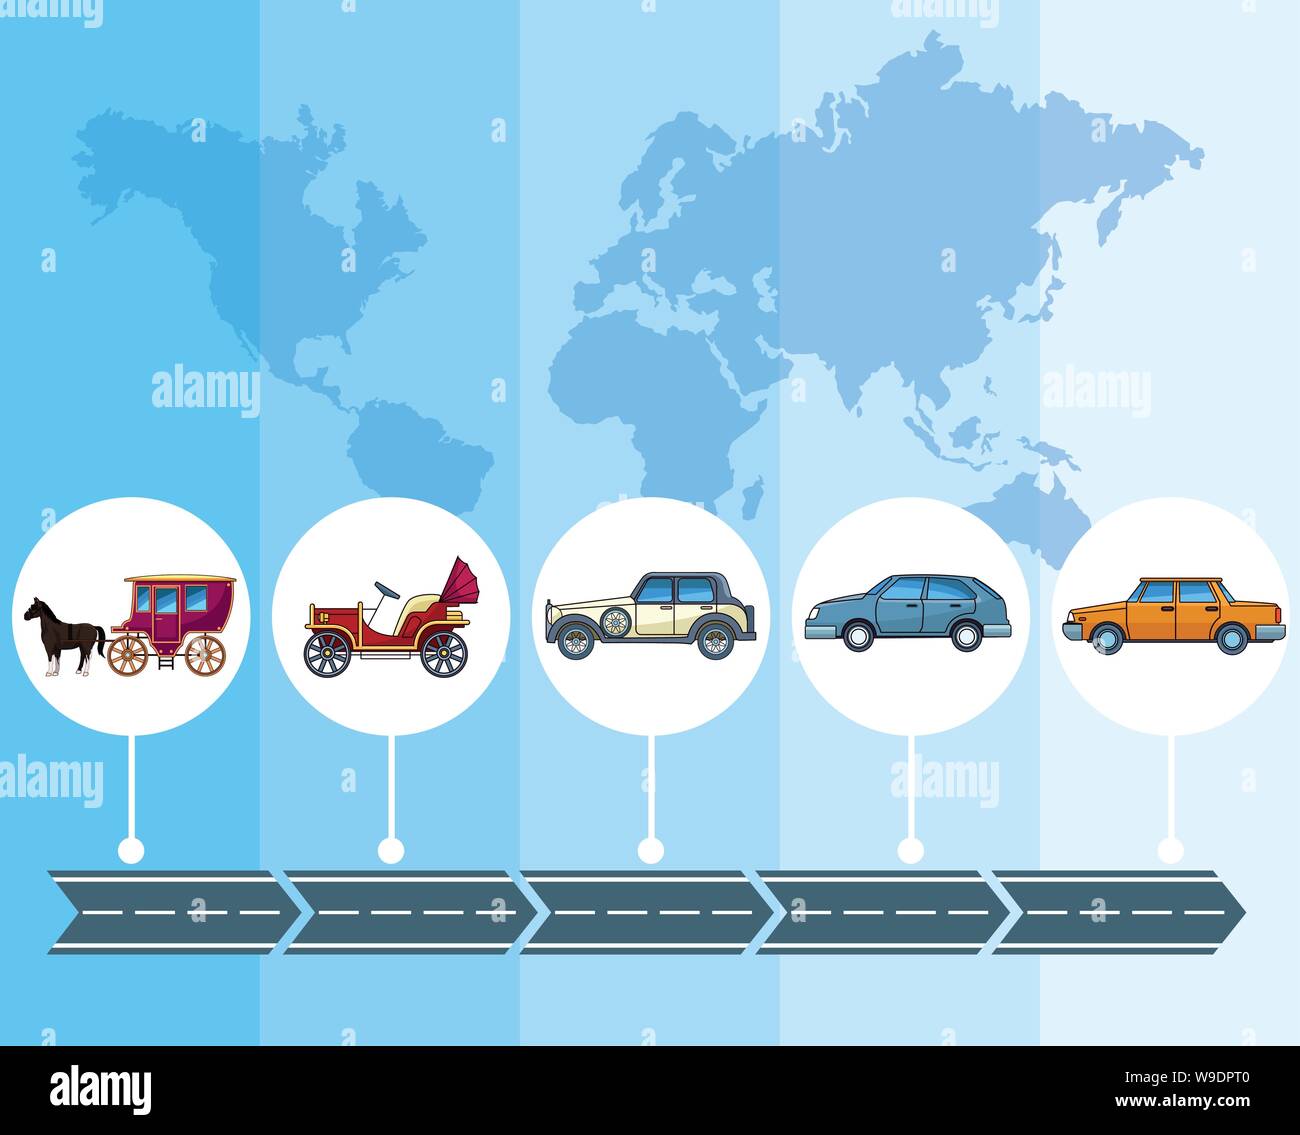 Timeline Of Vehicles